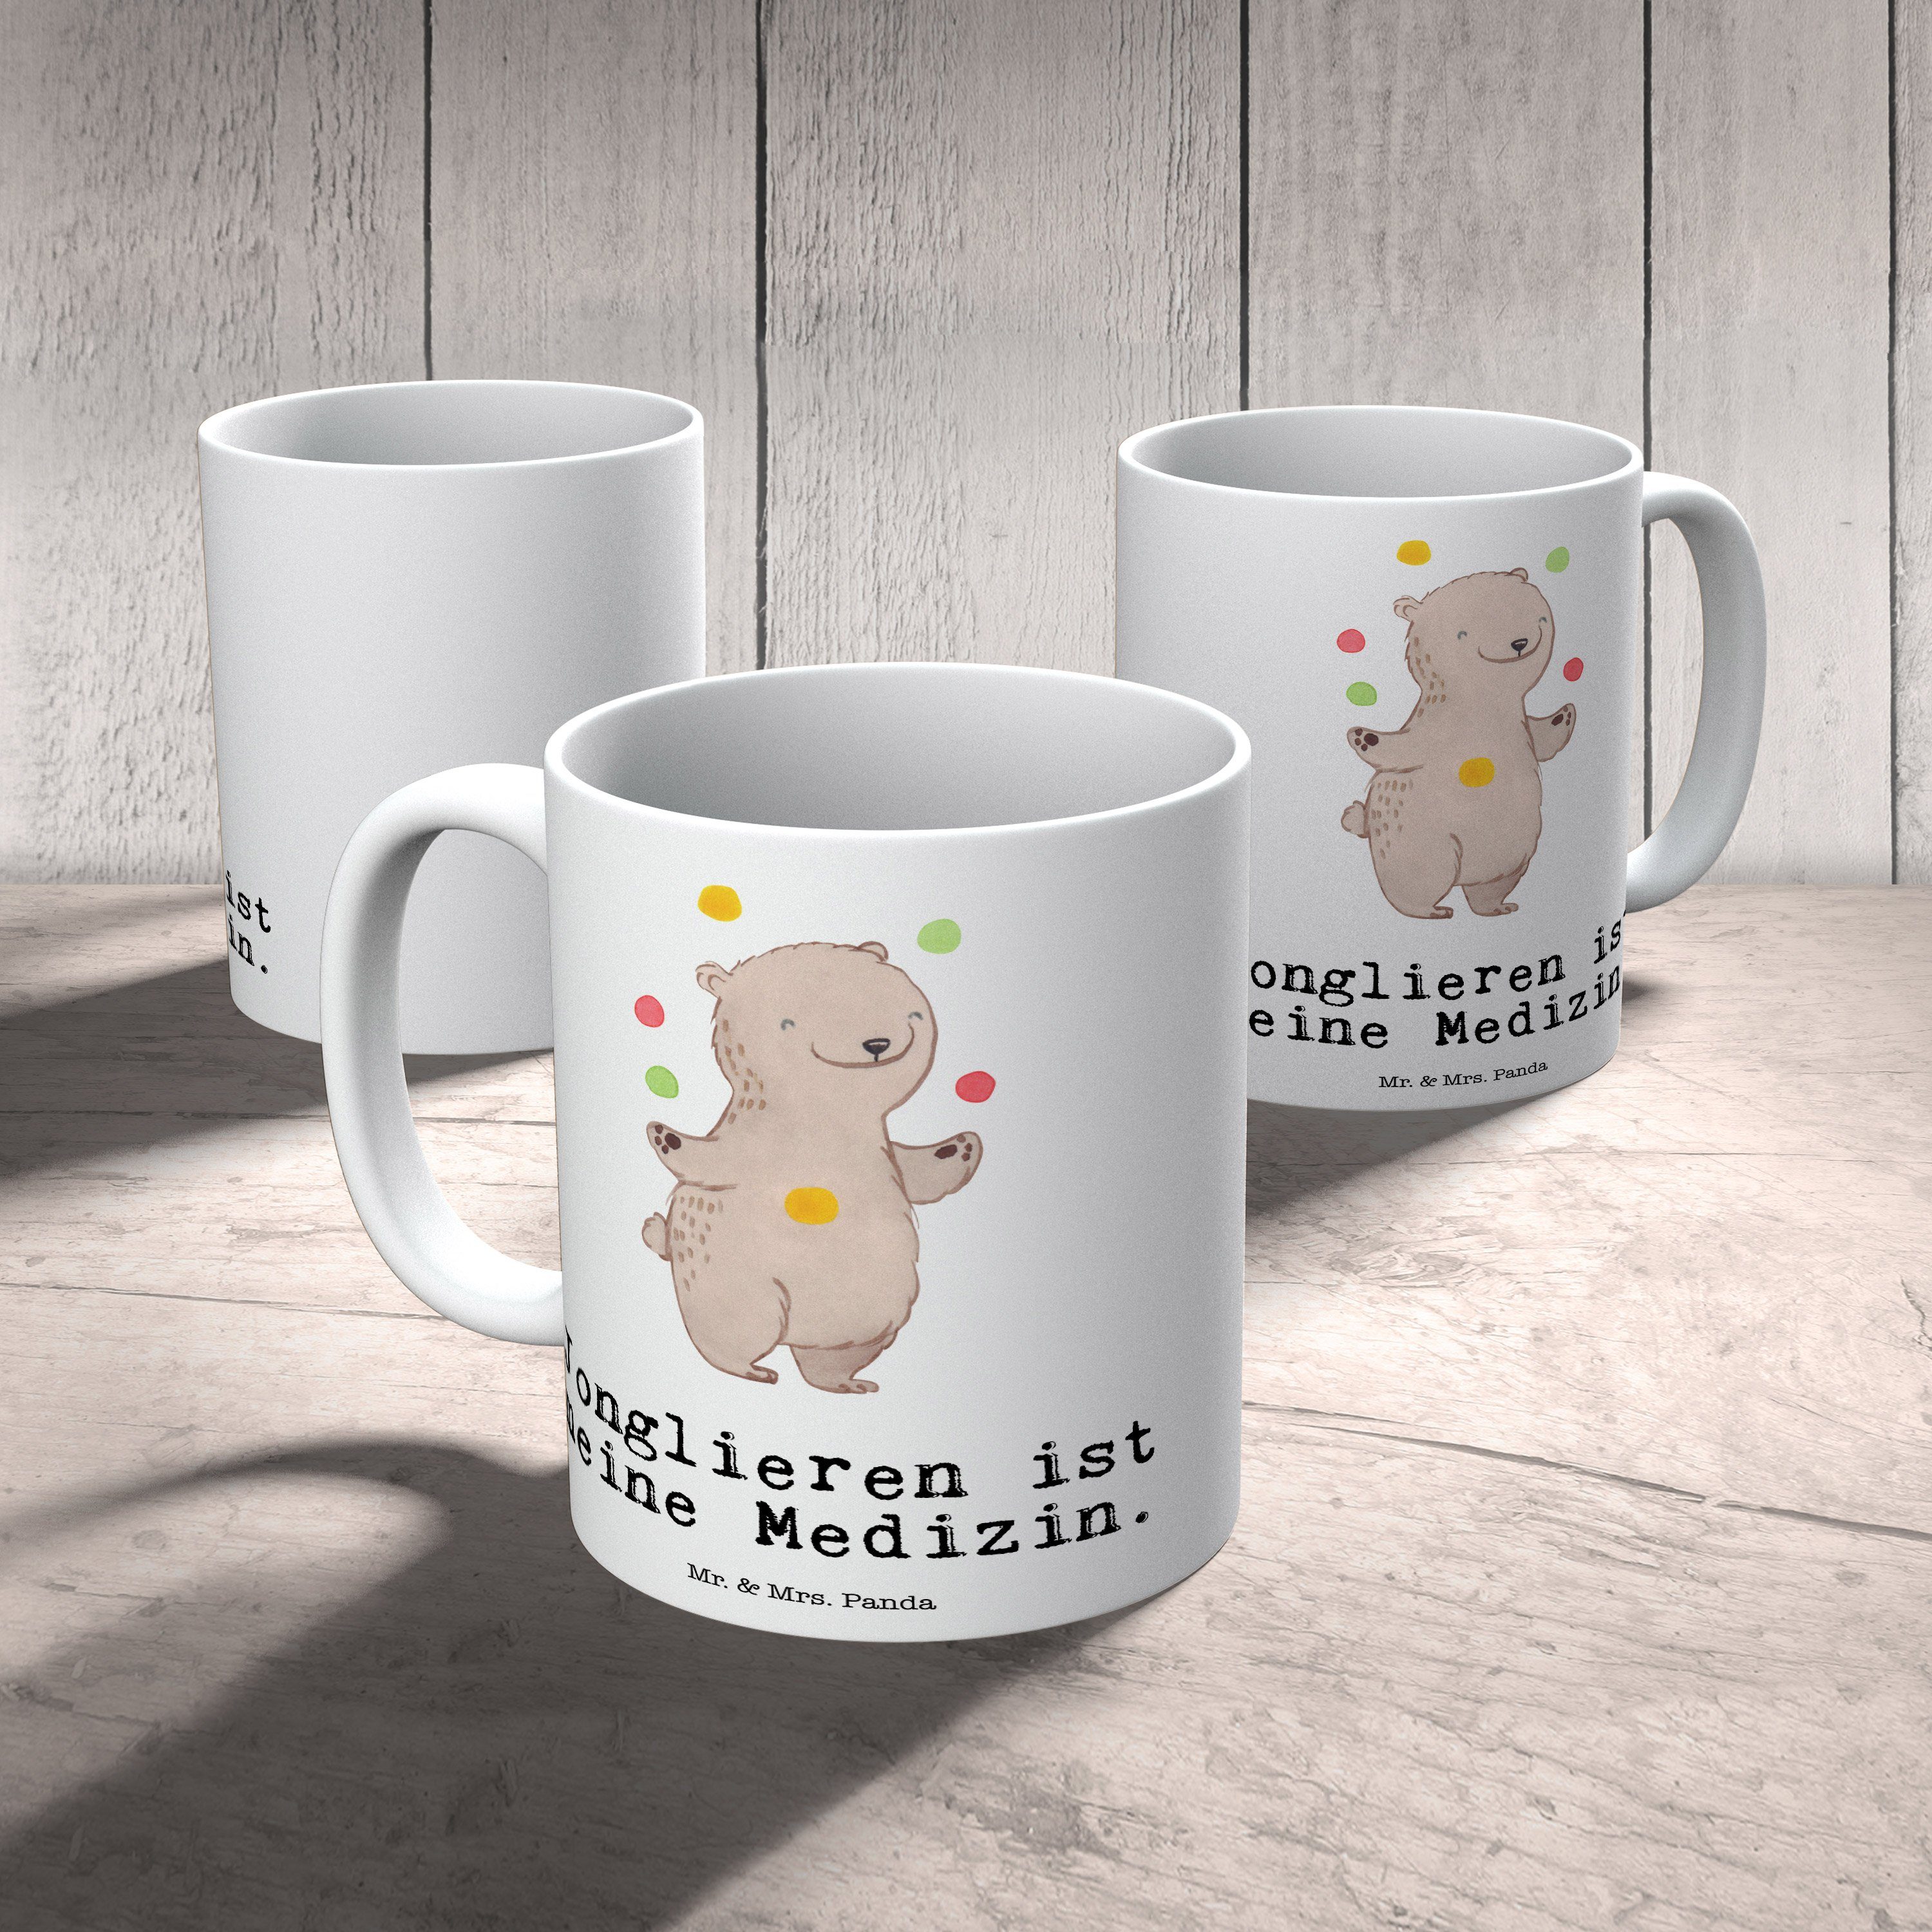 Mr. & Mrs. Panda - Jonglieren Tasse, Medizin - Tasse Keramik Porze, Hobby, Gewinn, Geschenk, Weiß Bär